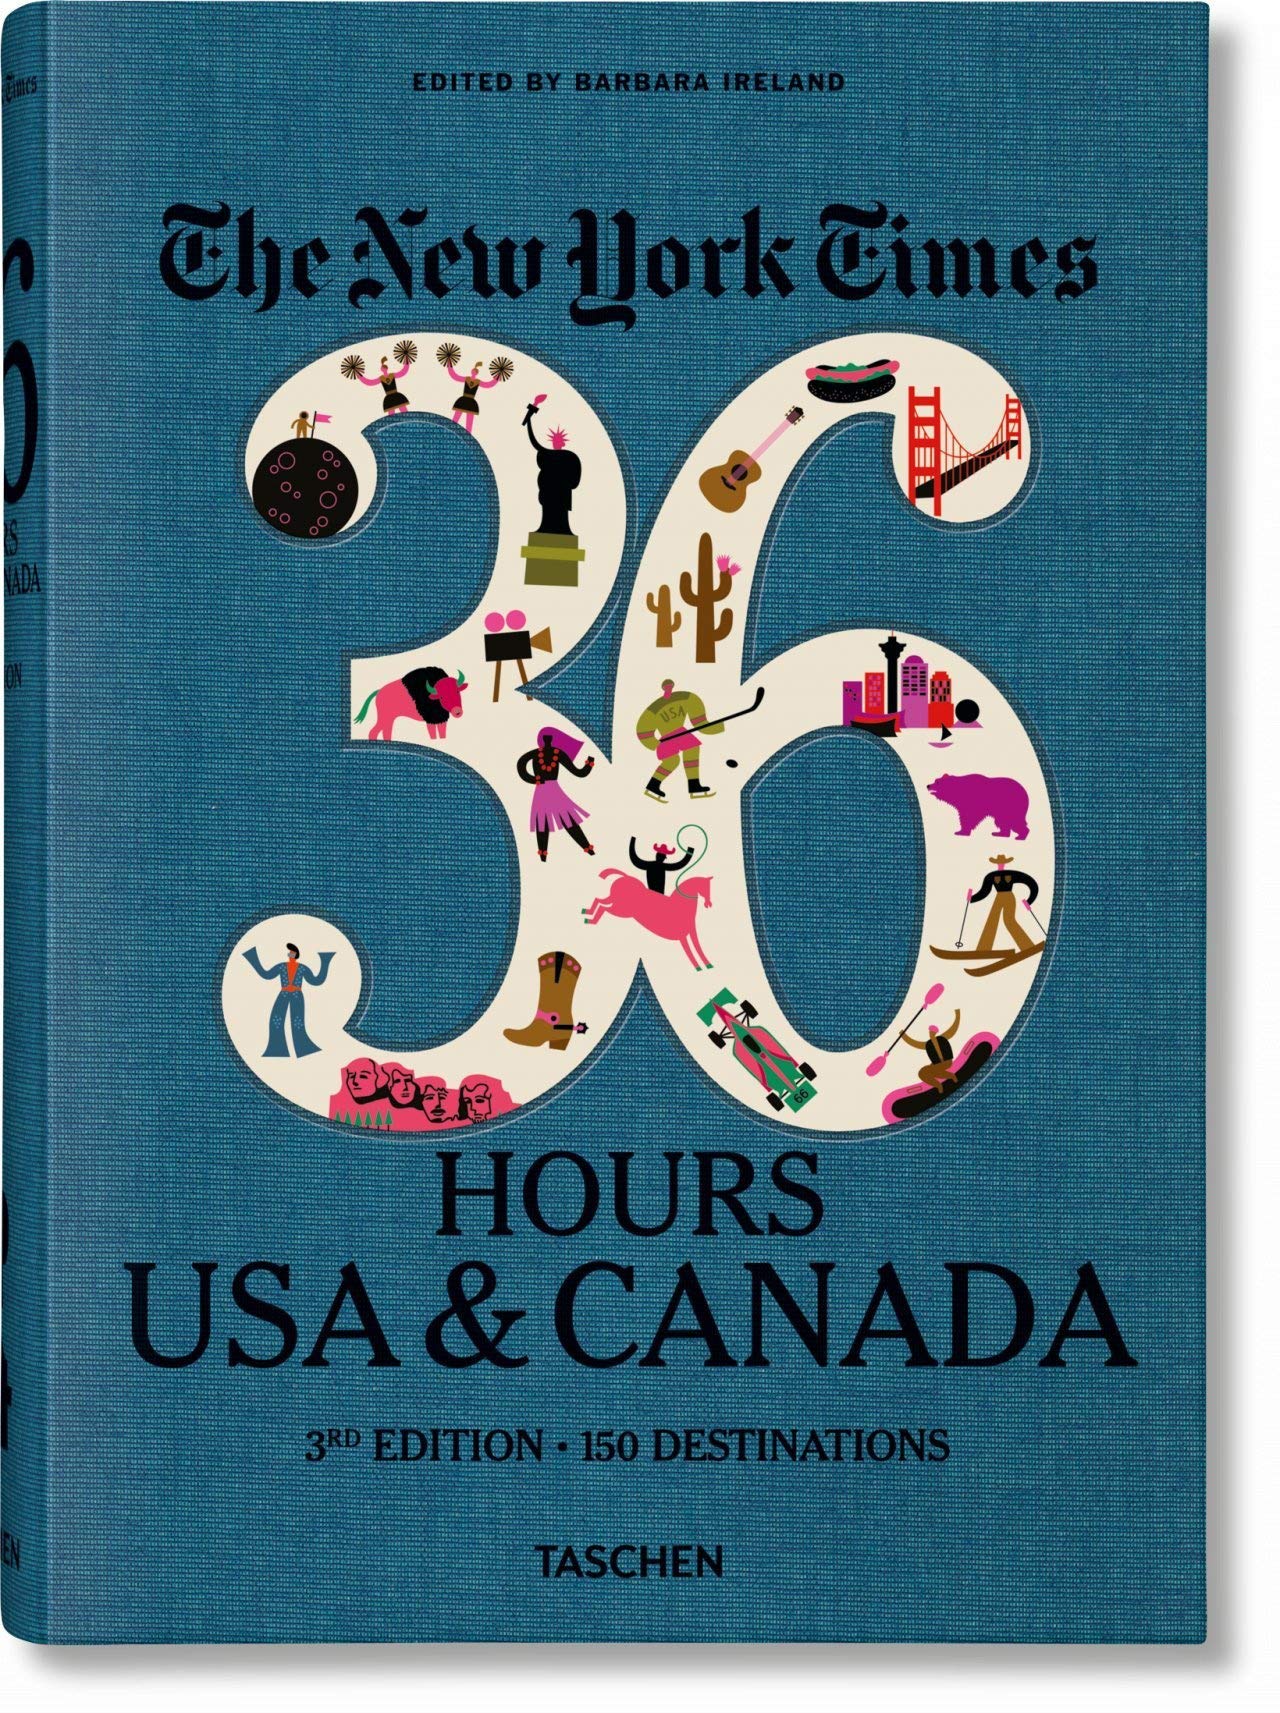 36 HOURS USA & CANADA